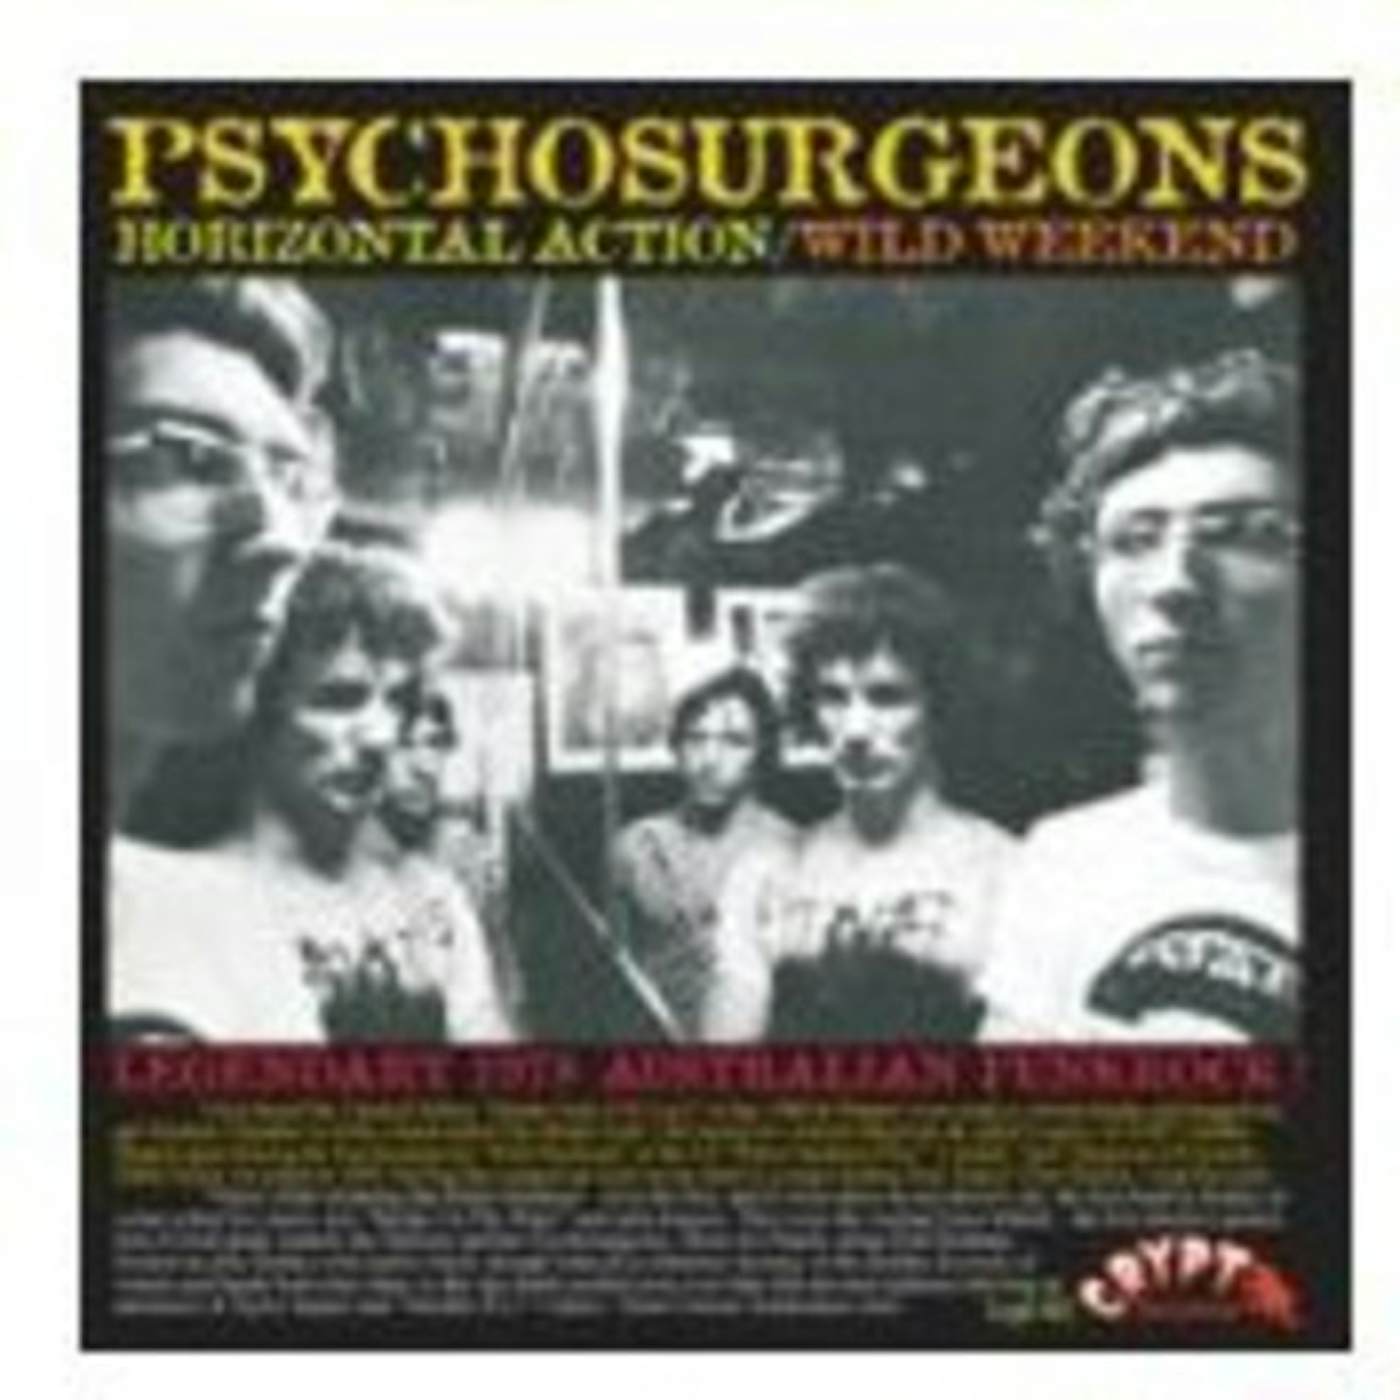 Psychosurgeons HORIZONTAL ACTION Vinyl Record